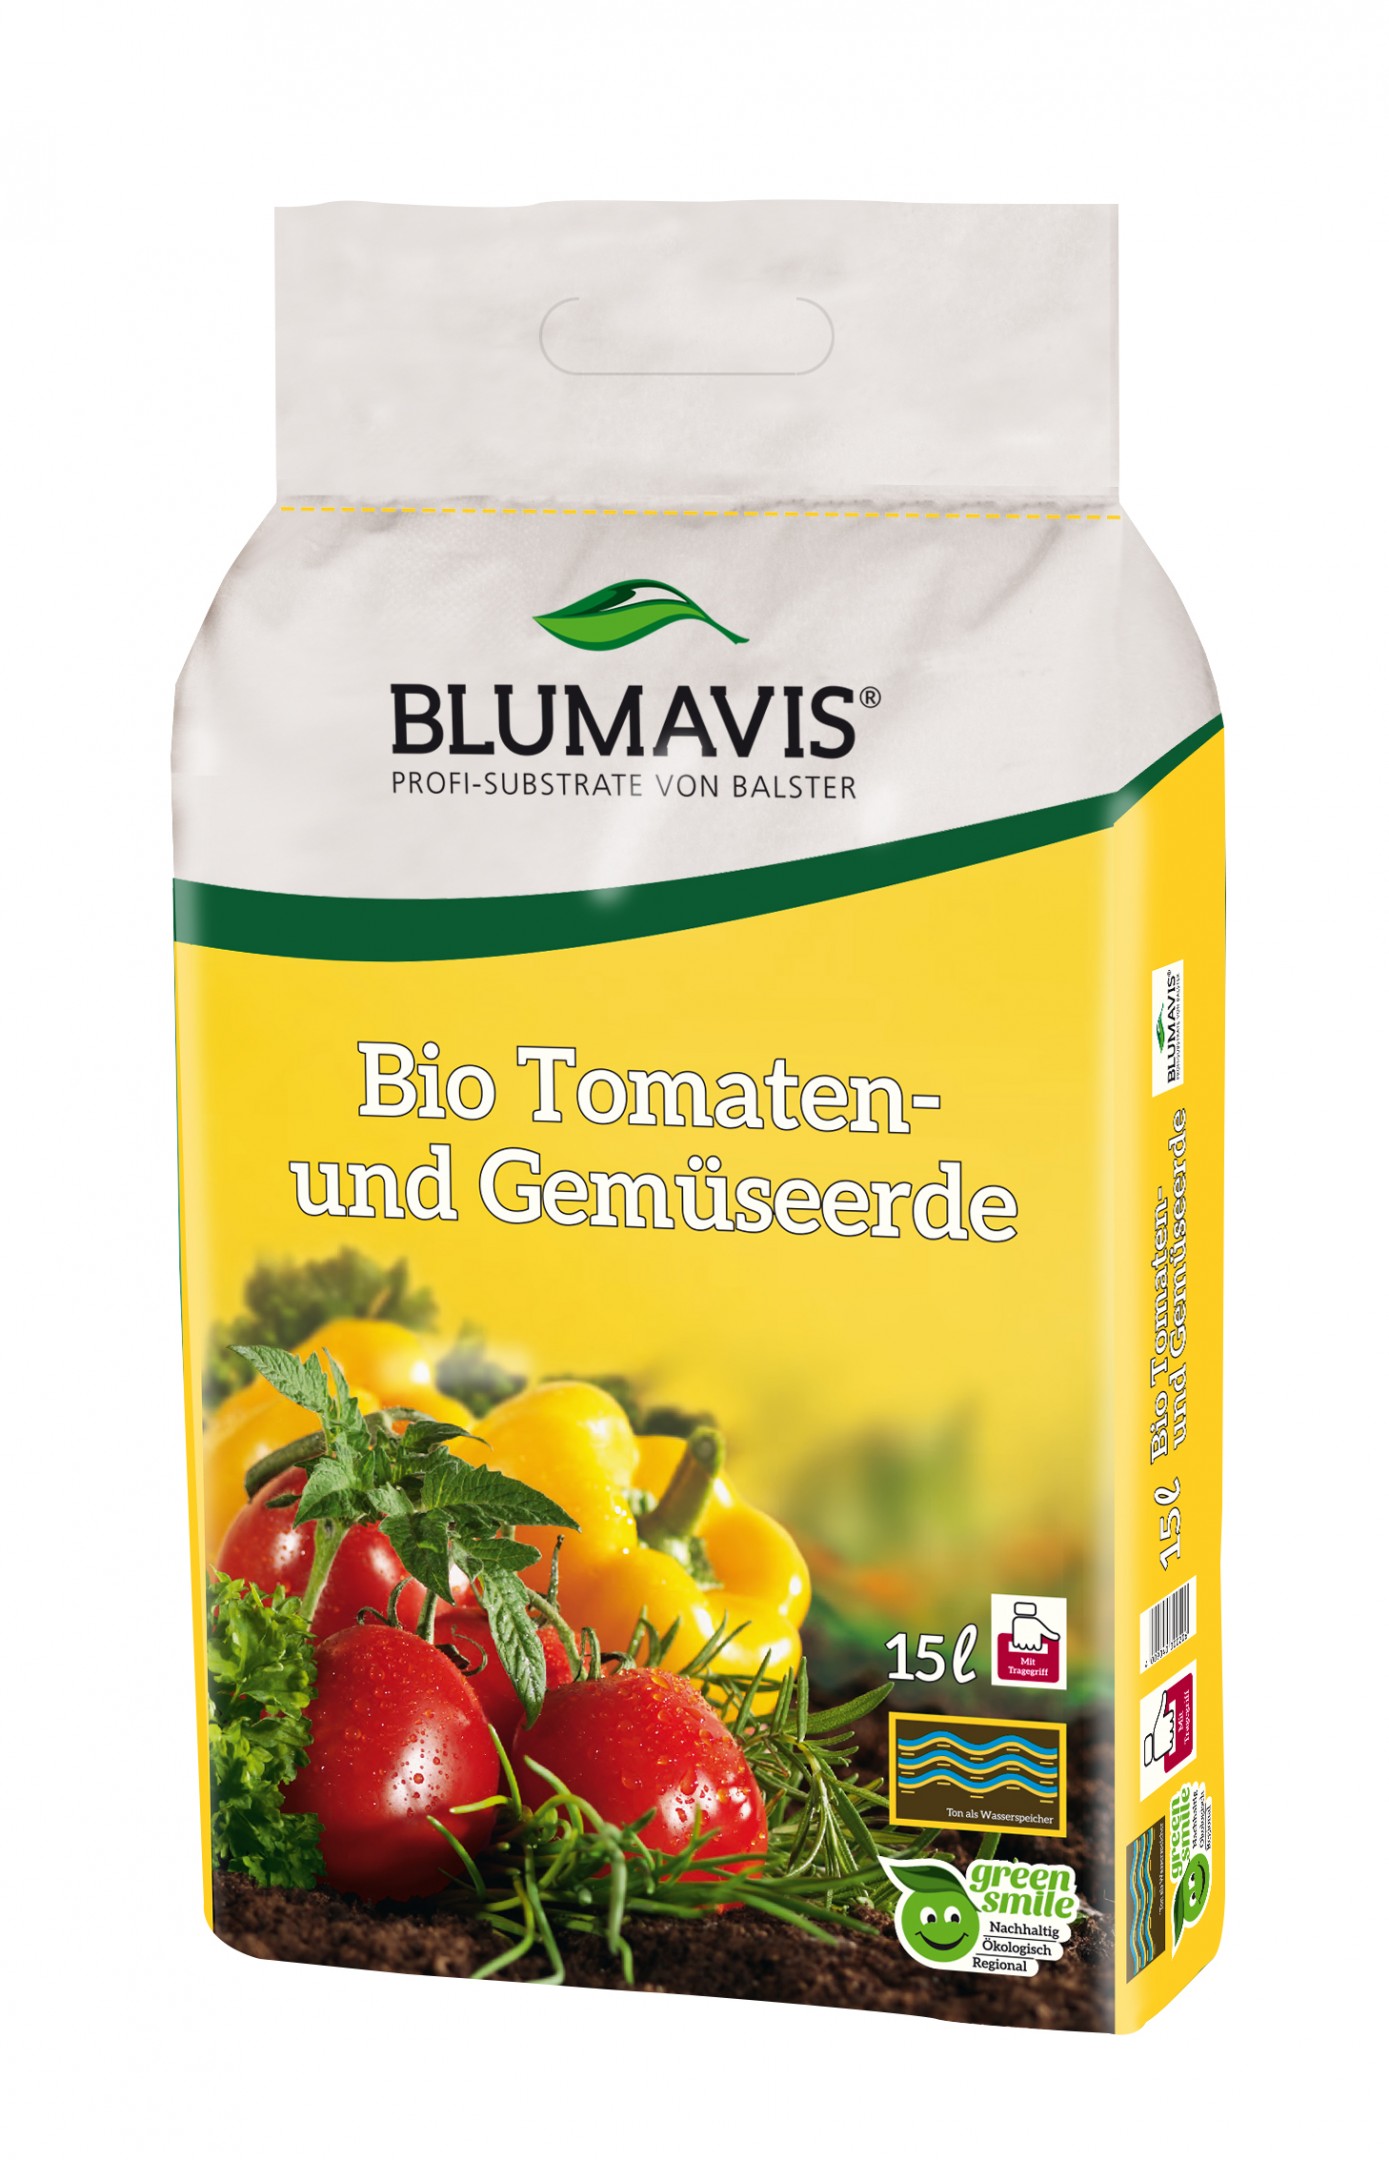 Bio Tomaten- & Gemüseerde torffrei Bild 1